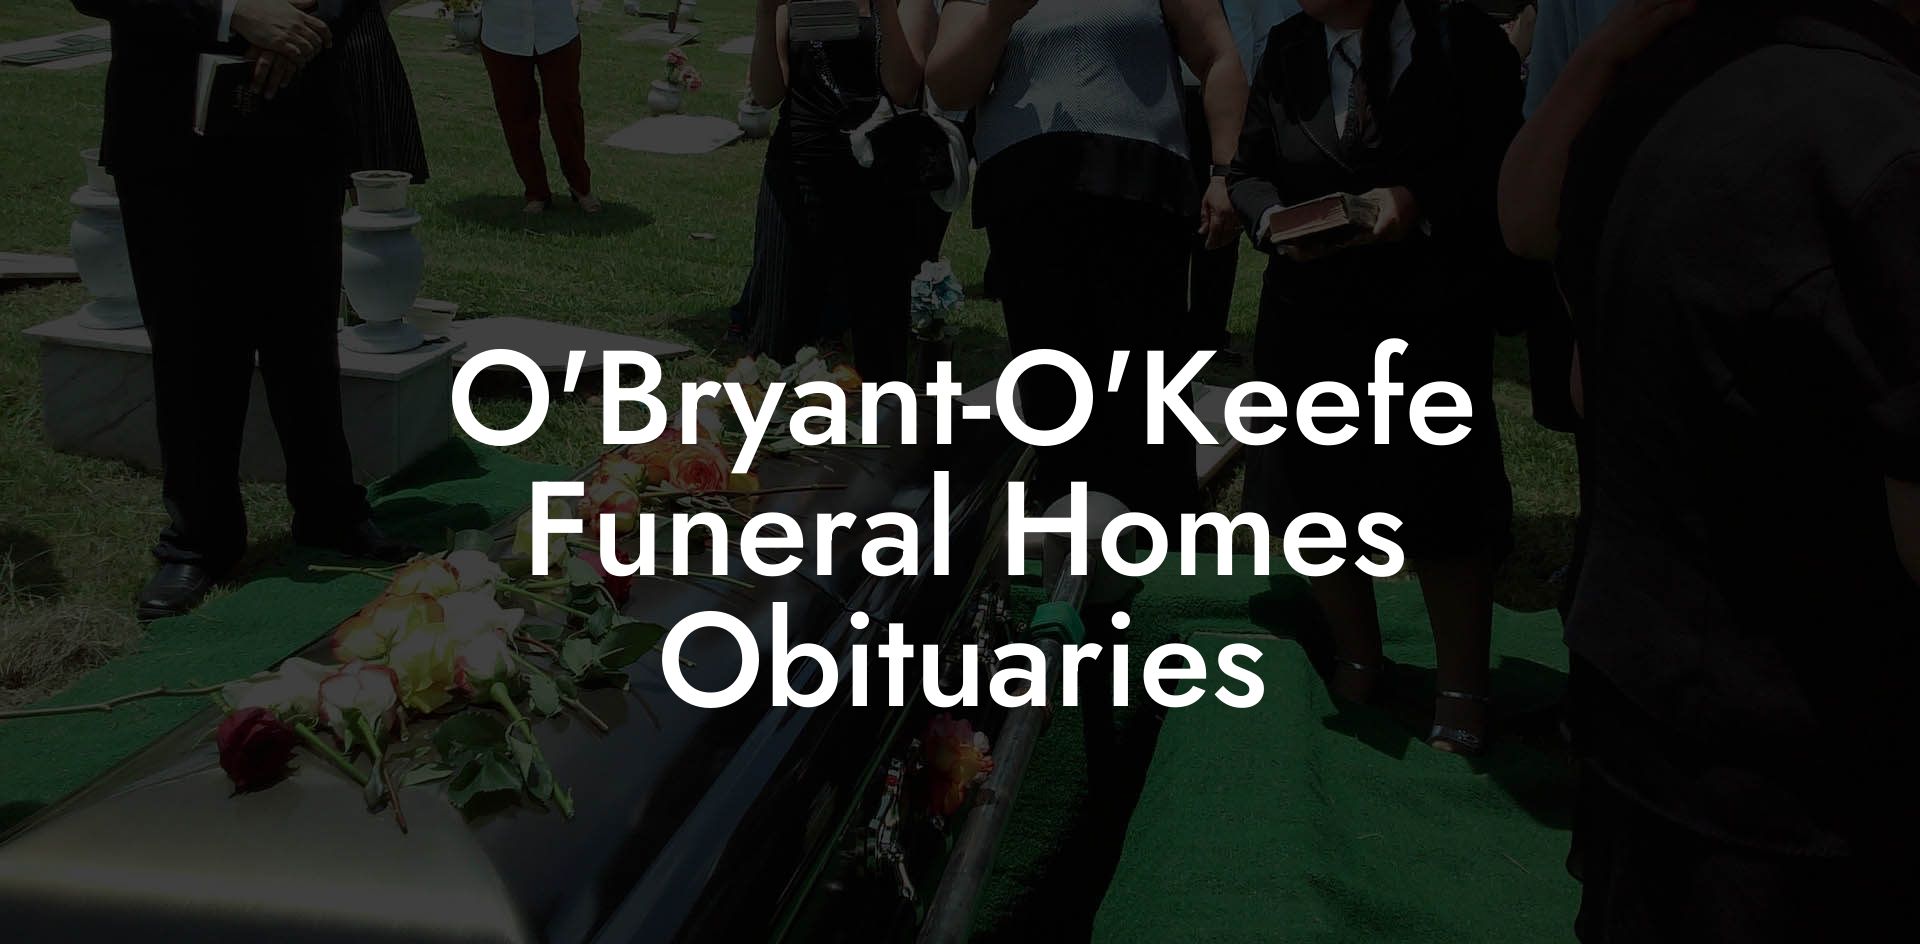 O'Bryant-O'Keefe Funeral Homes Obituaries